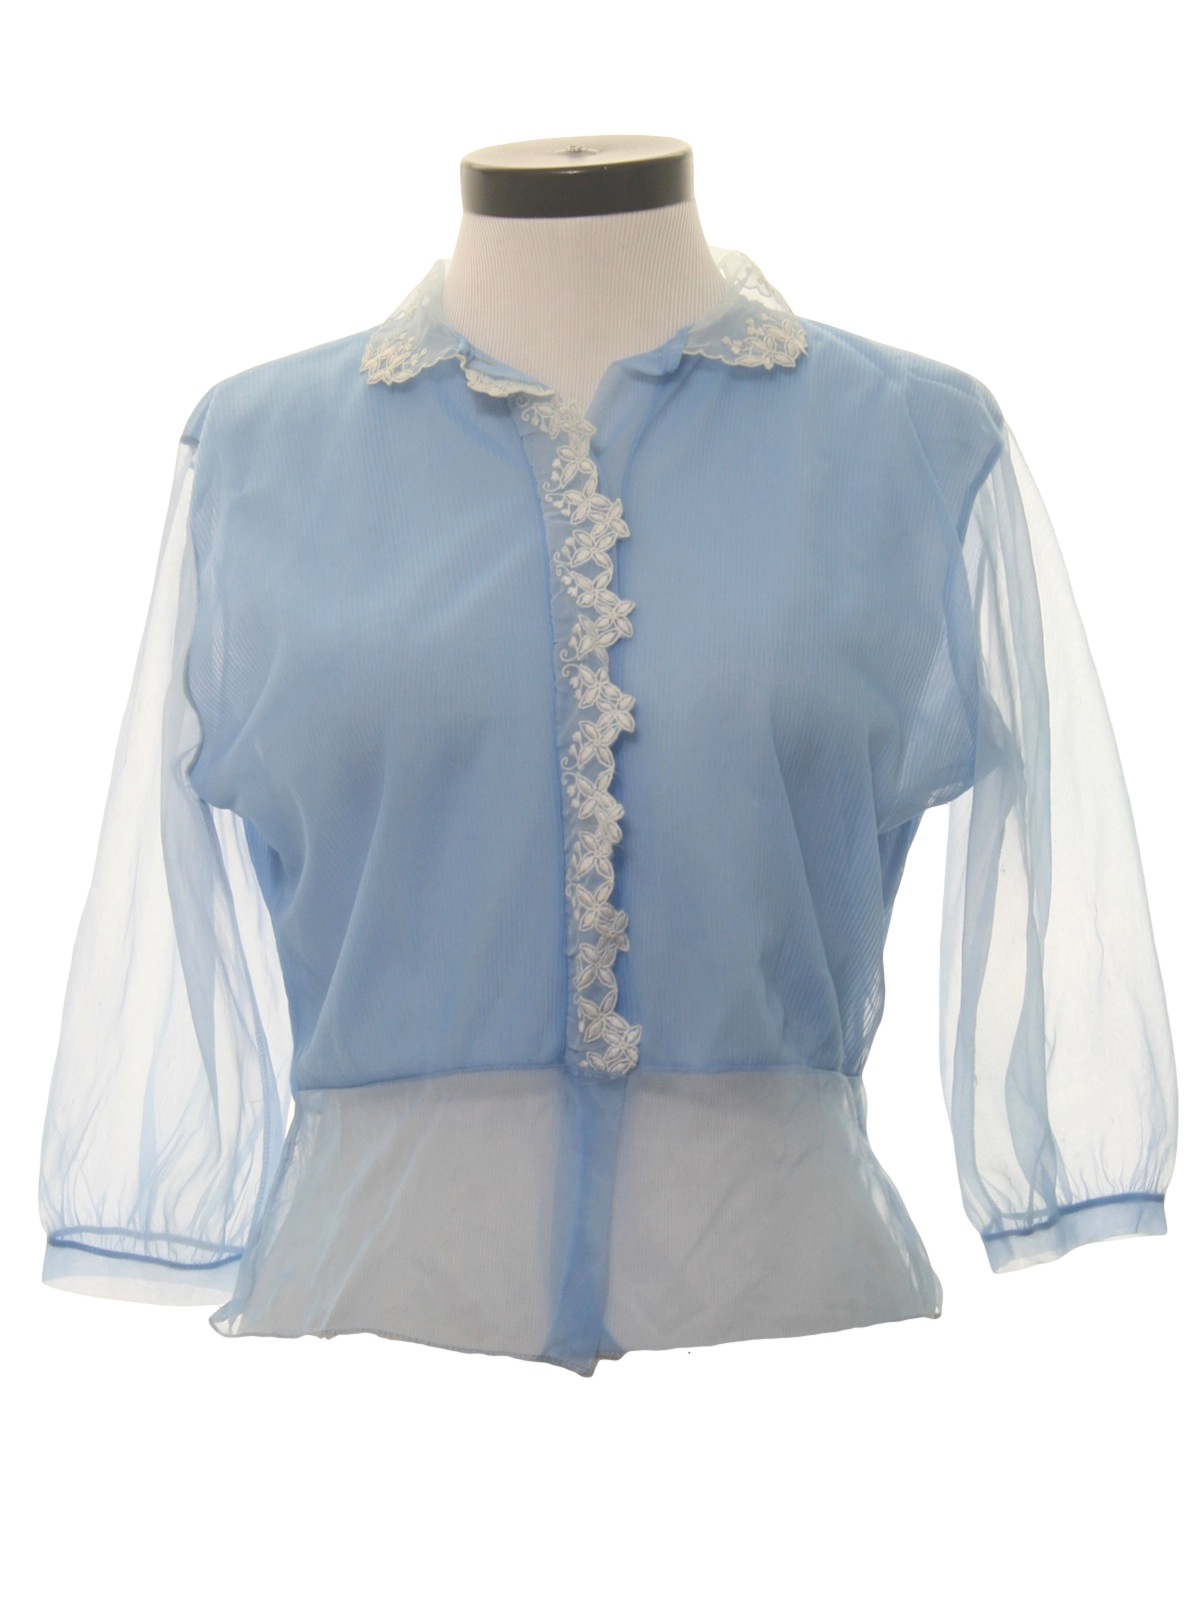 Retro 50's Shirt: Late 50s or early 60s -Kitty Kane- Womens sky blue ...